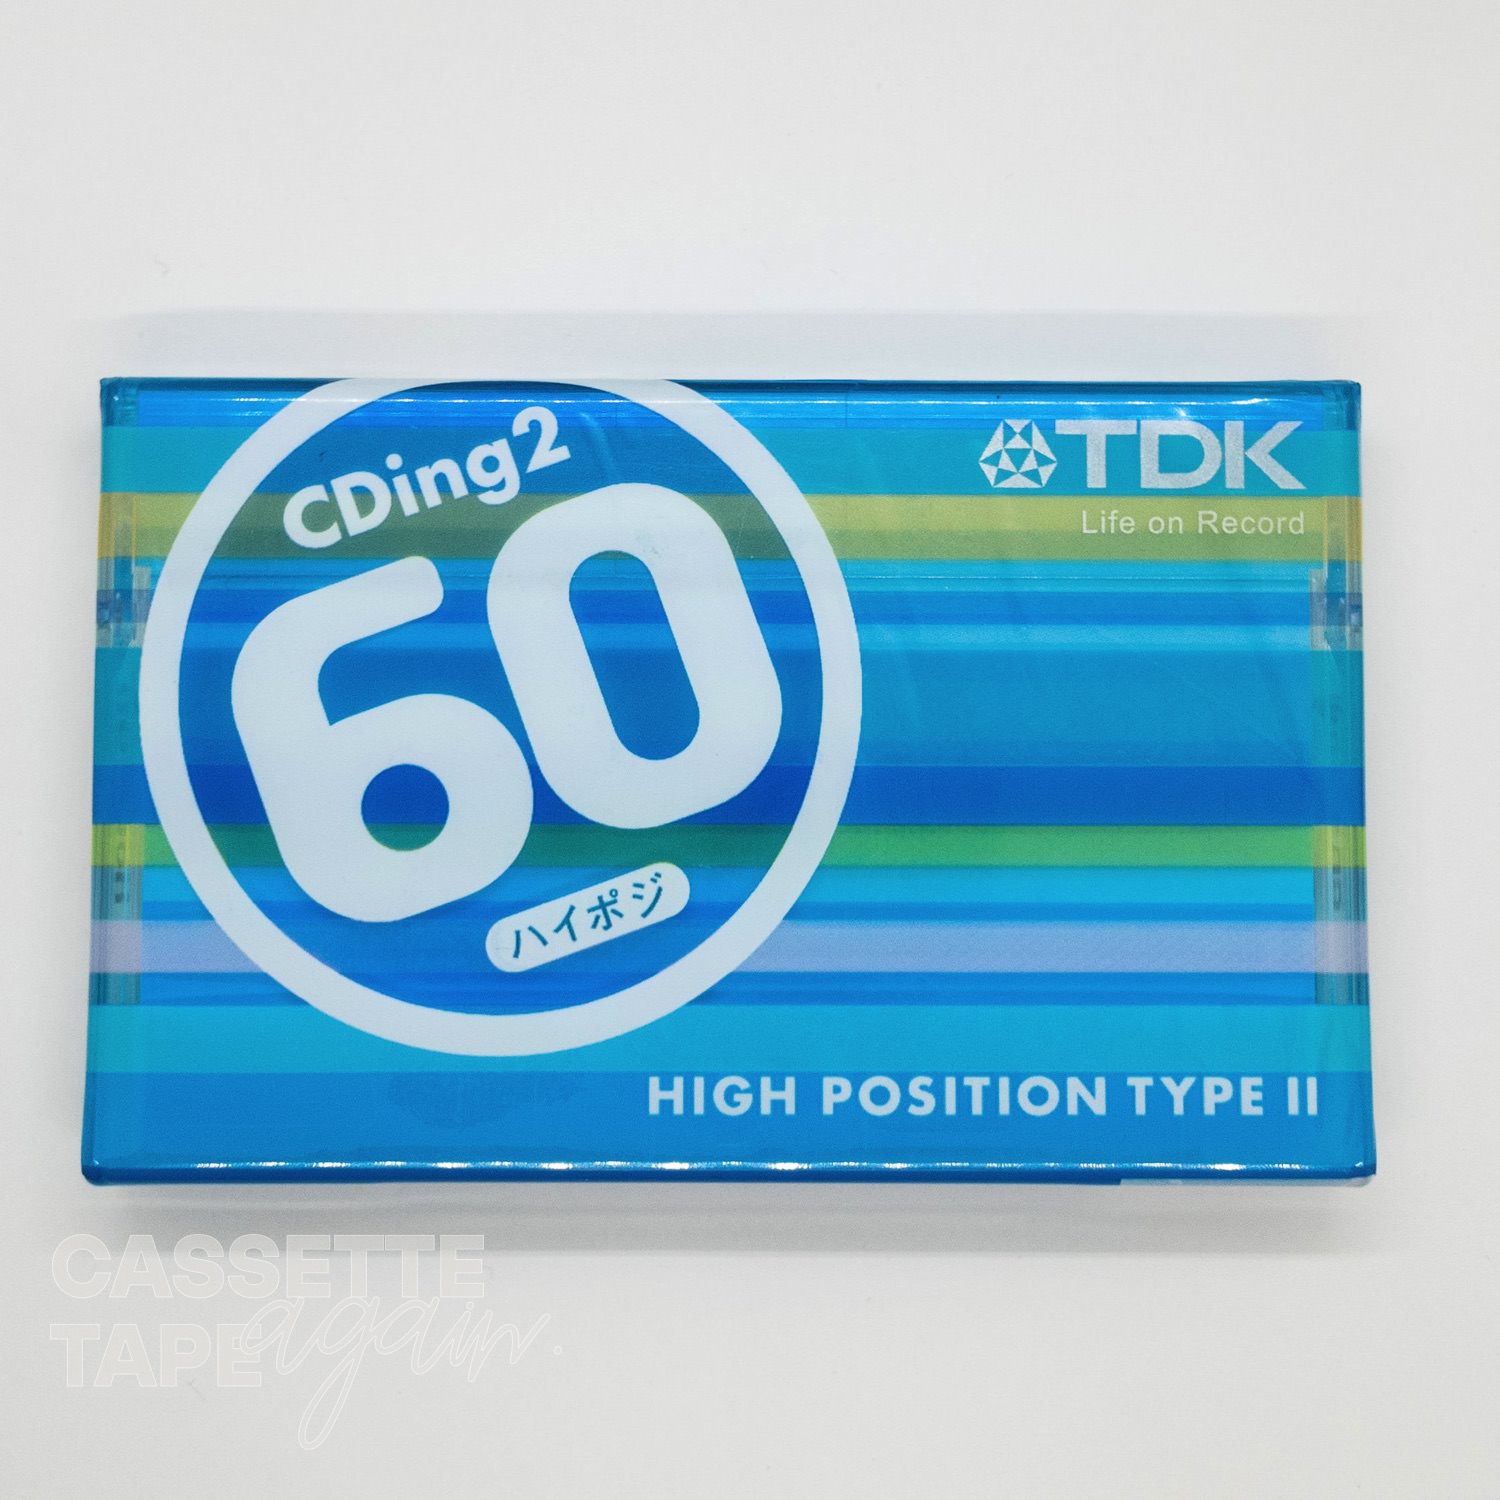 CDingII 60 / TDK(ハイポジ)